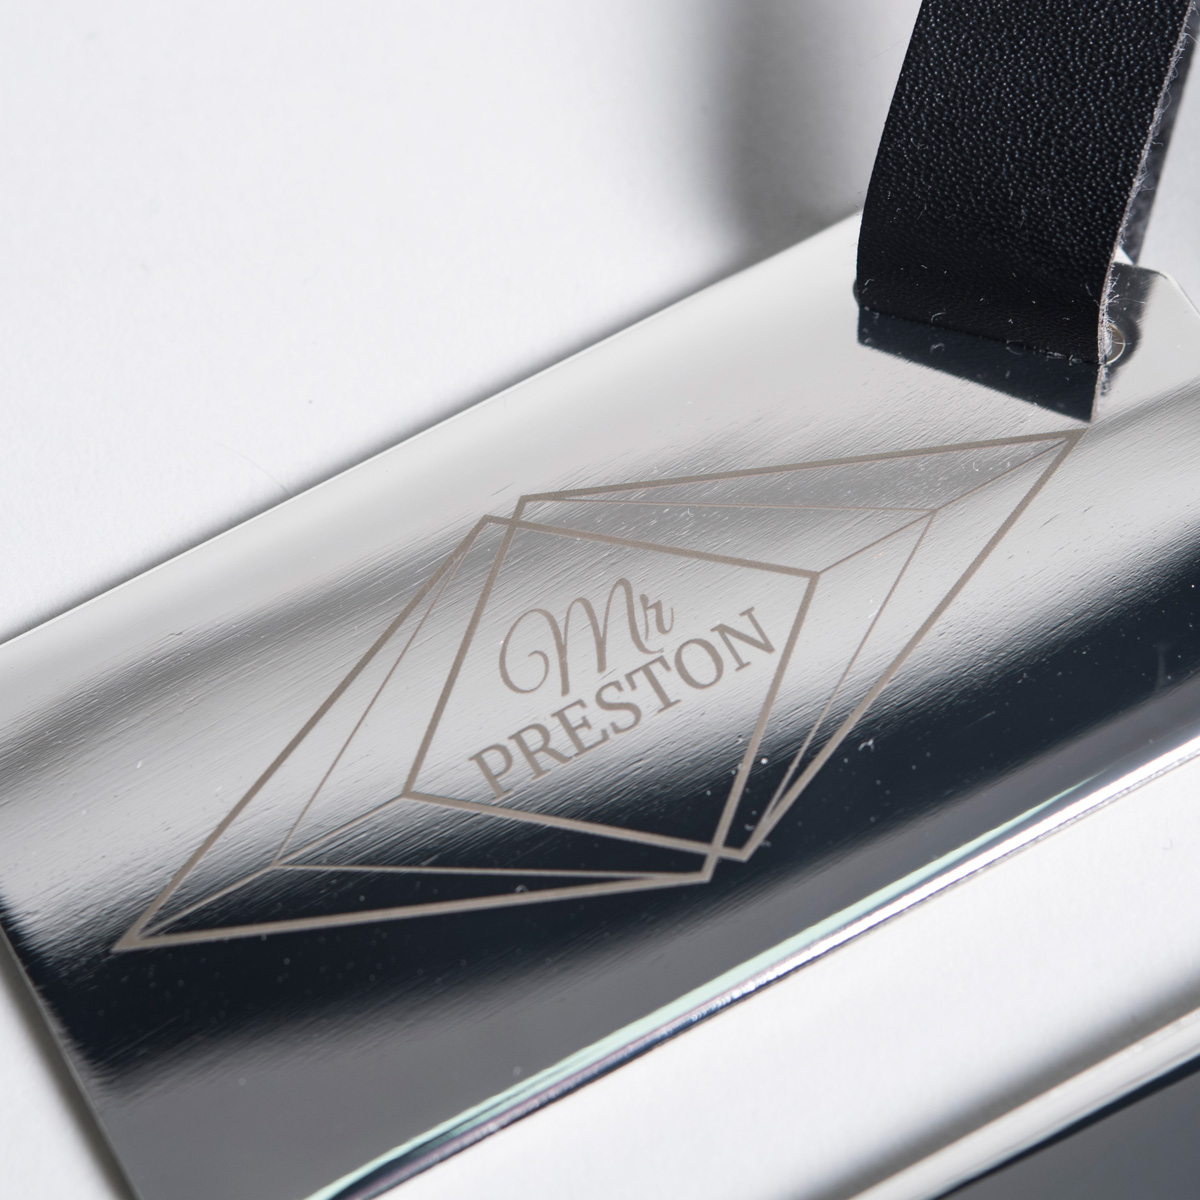 Personalised Stainless Steel Luggage Tags - Geometric Diamonds Mr & Mrs